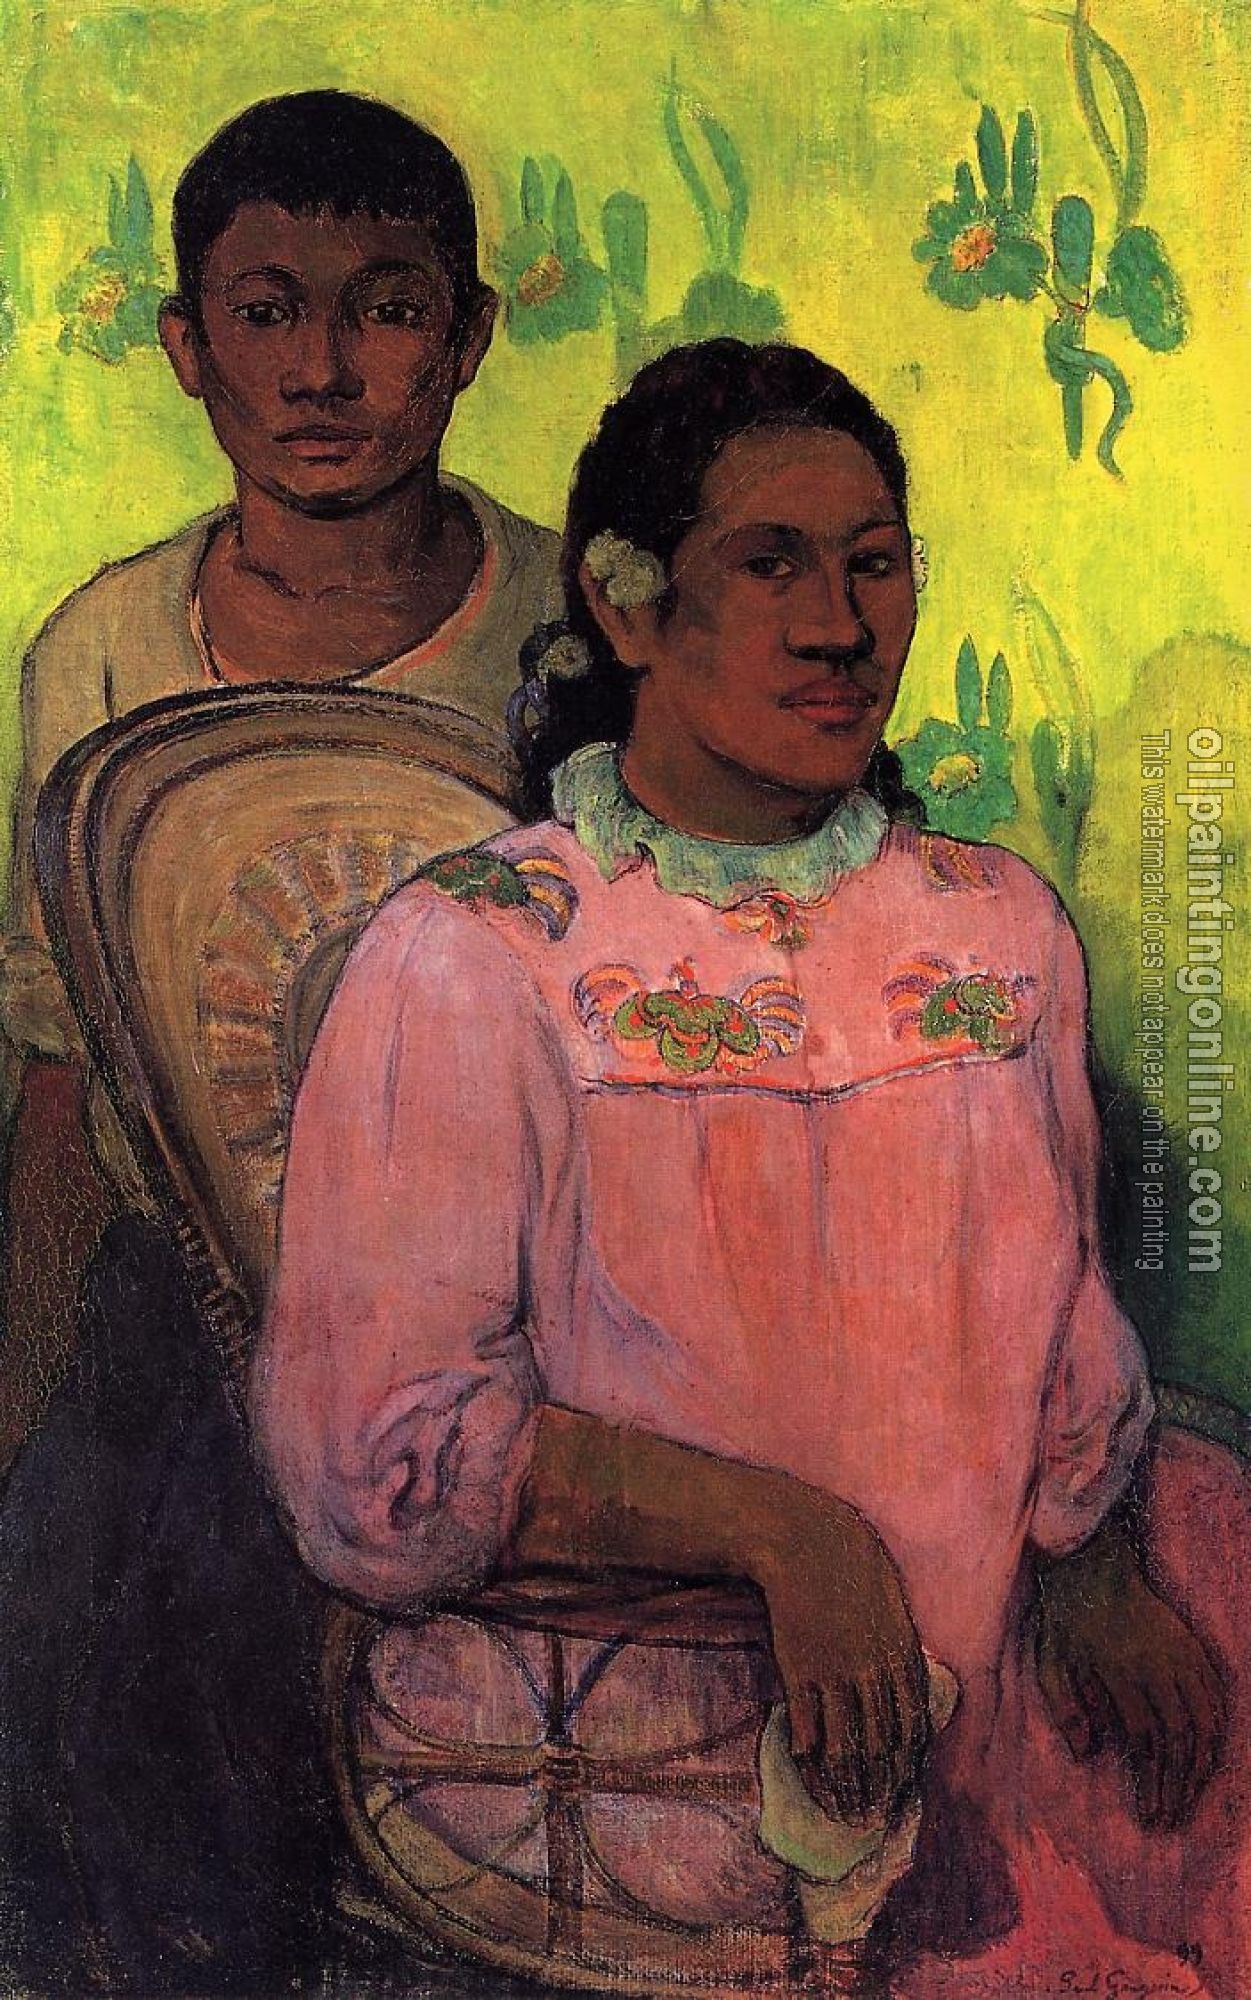 Gauguin, Paul - Tahitian Woman and Boy